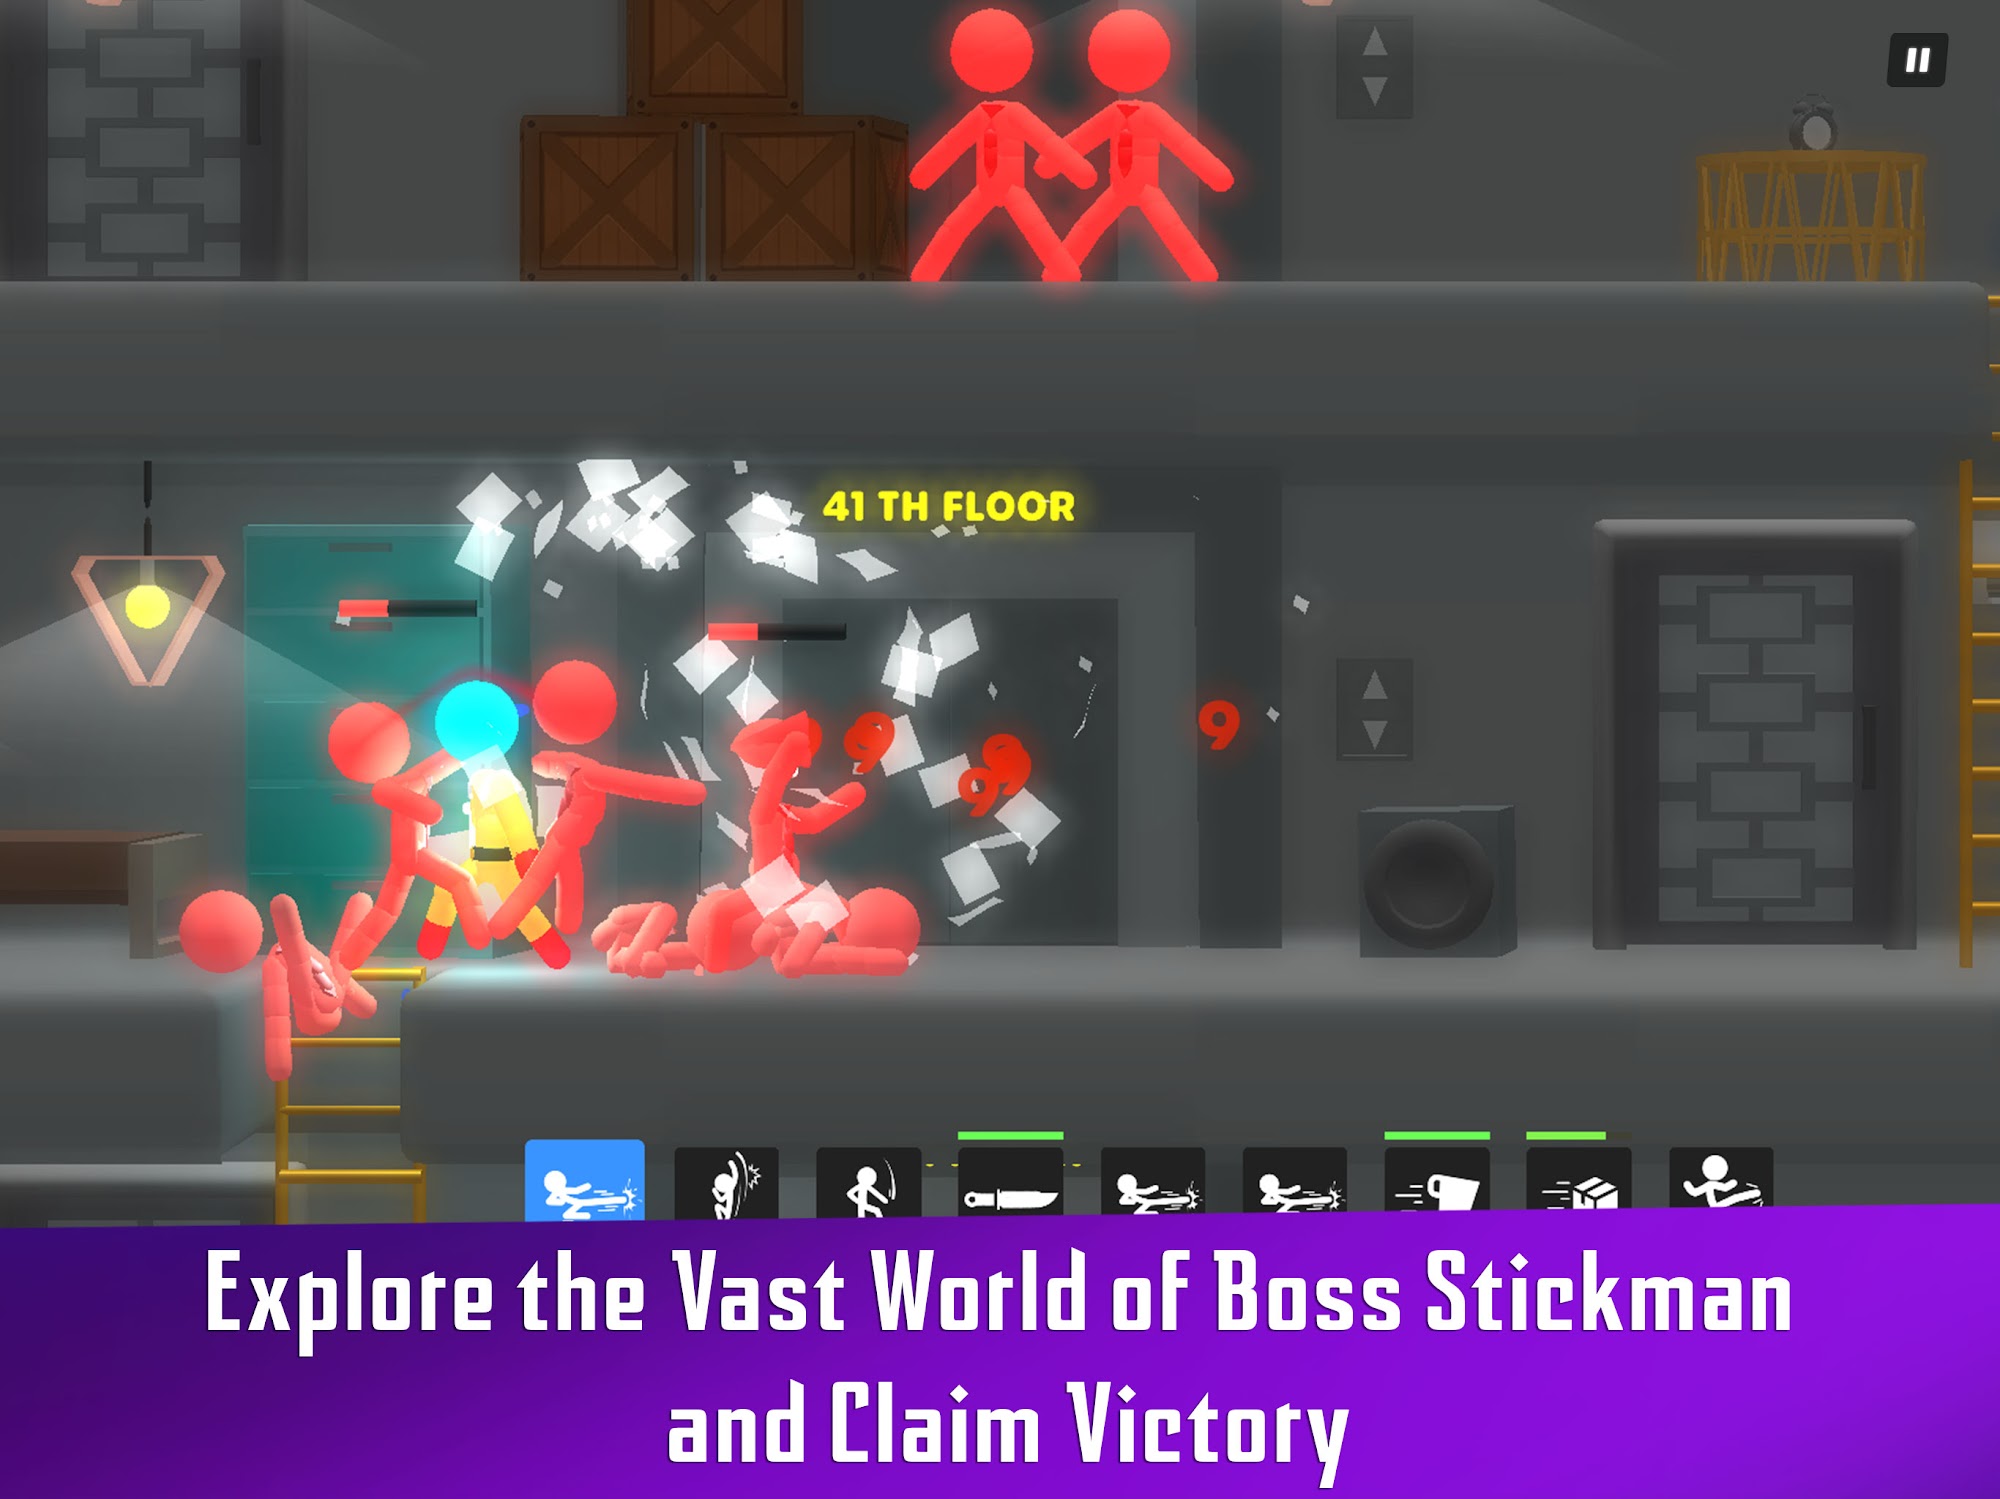 Boss Stickman - Android game screenshots.